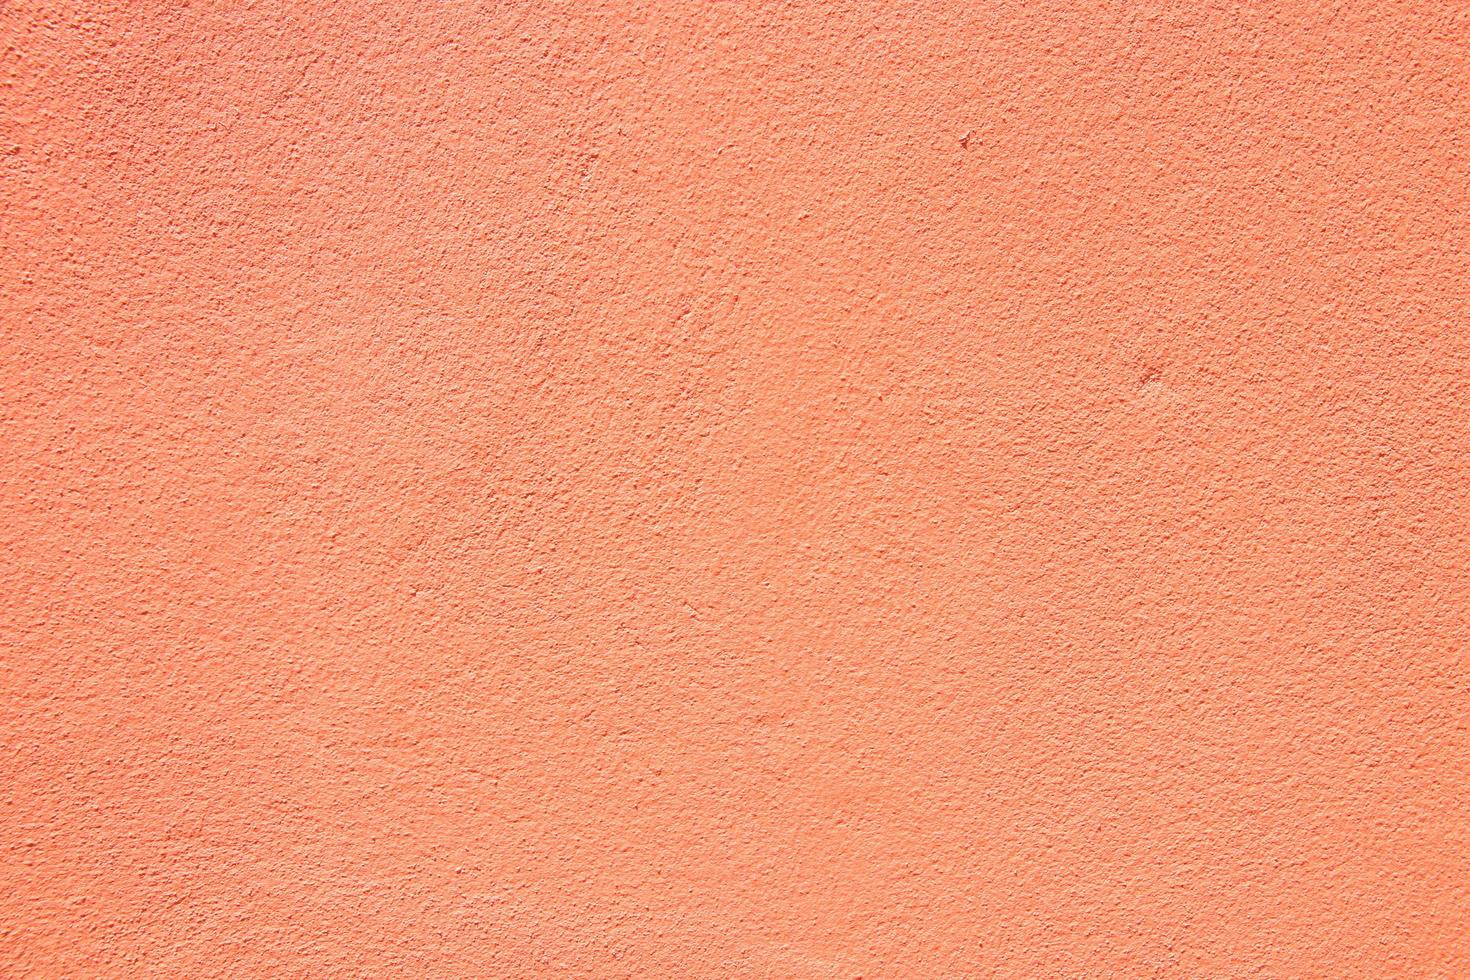 Orange wall texture background photo